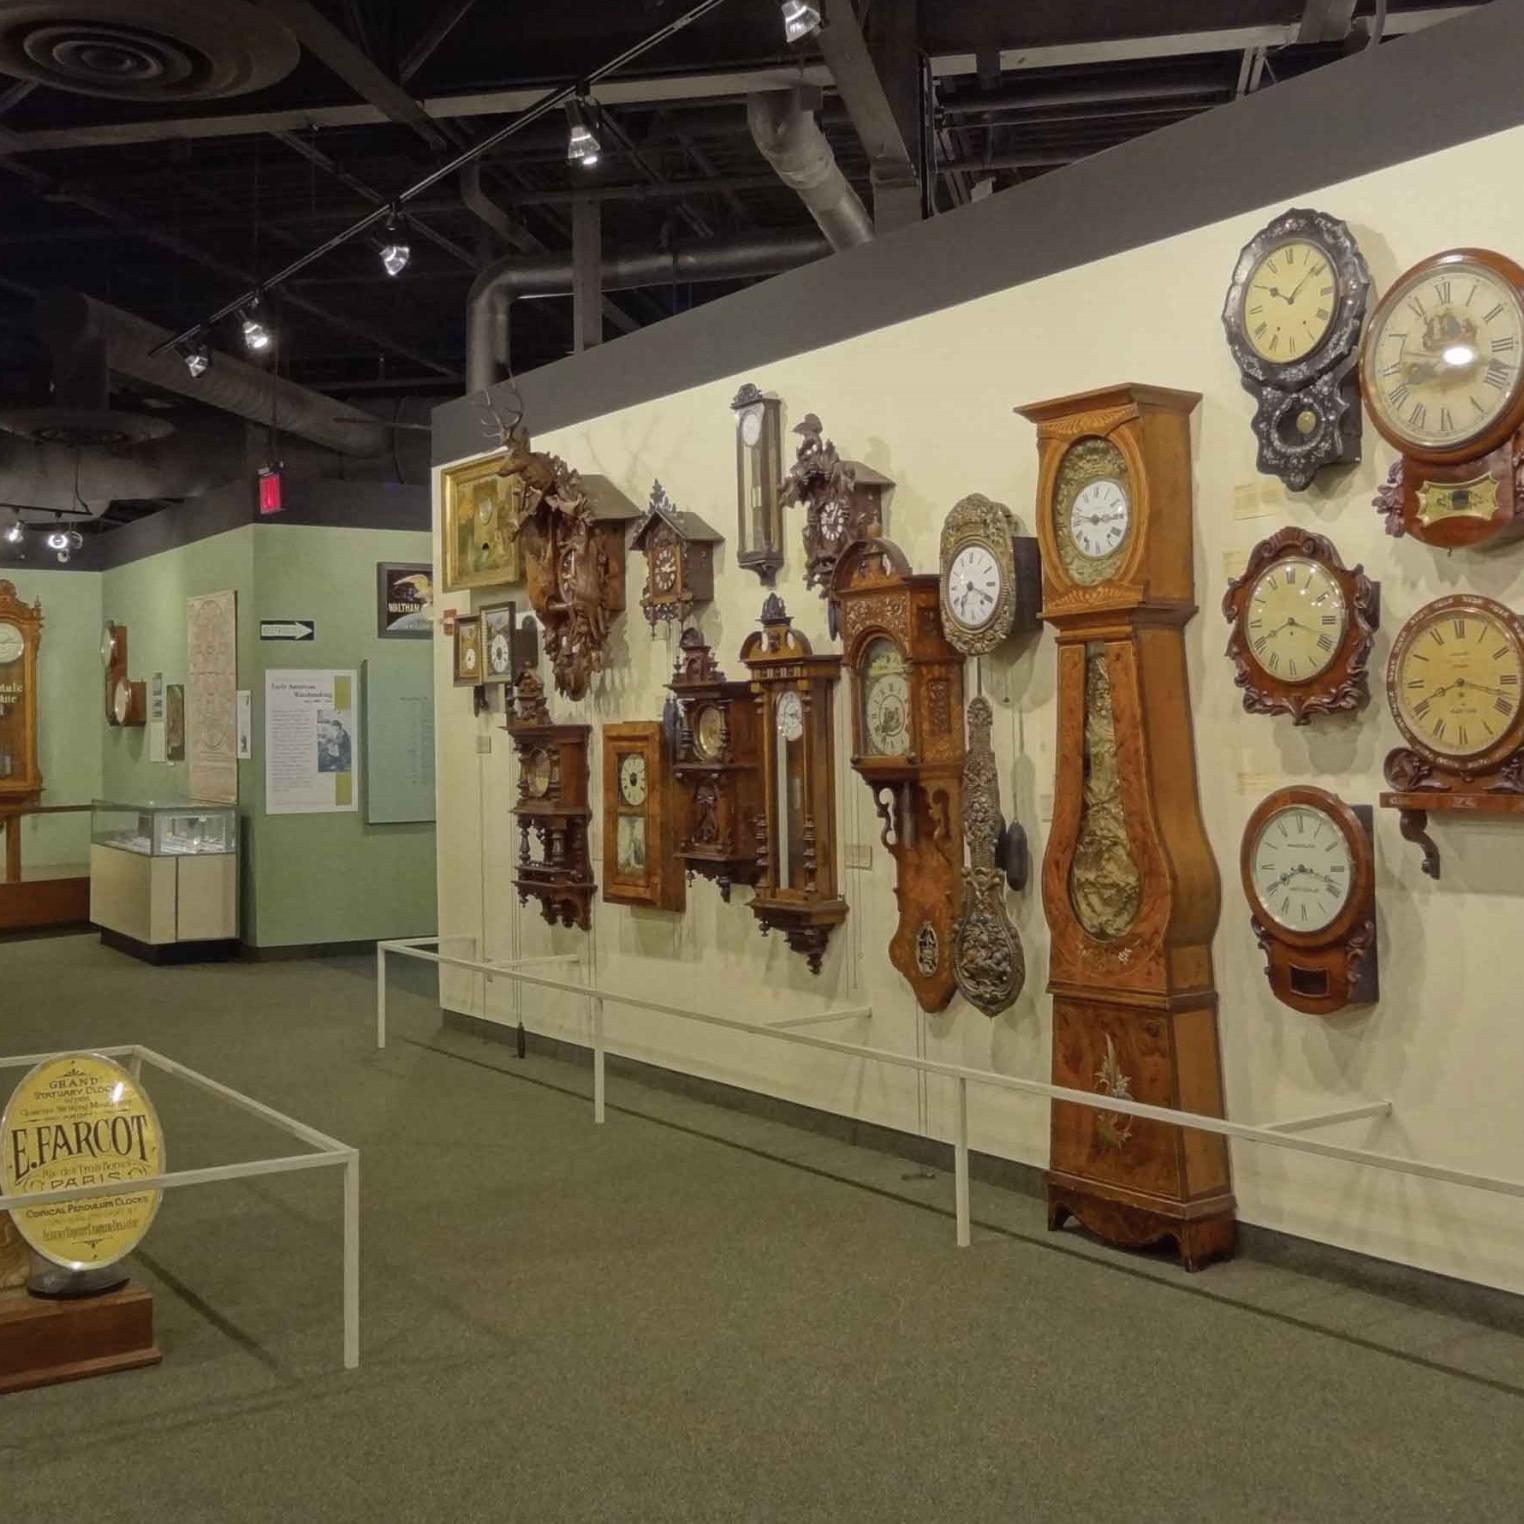 National Watch & Clock Museum